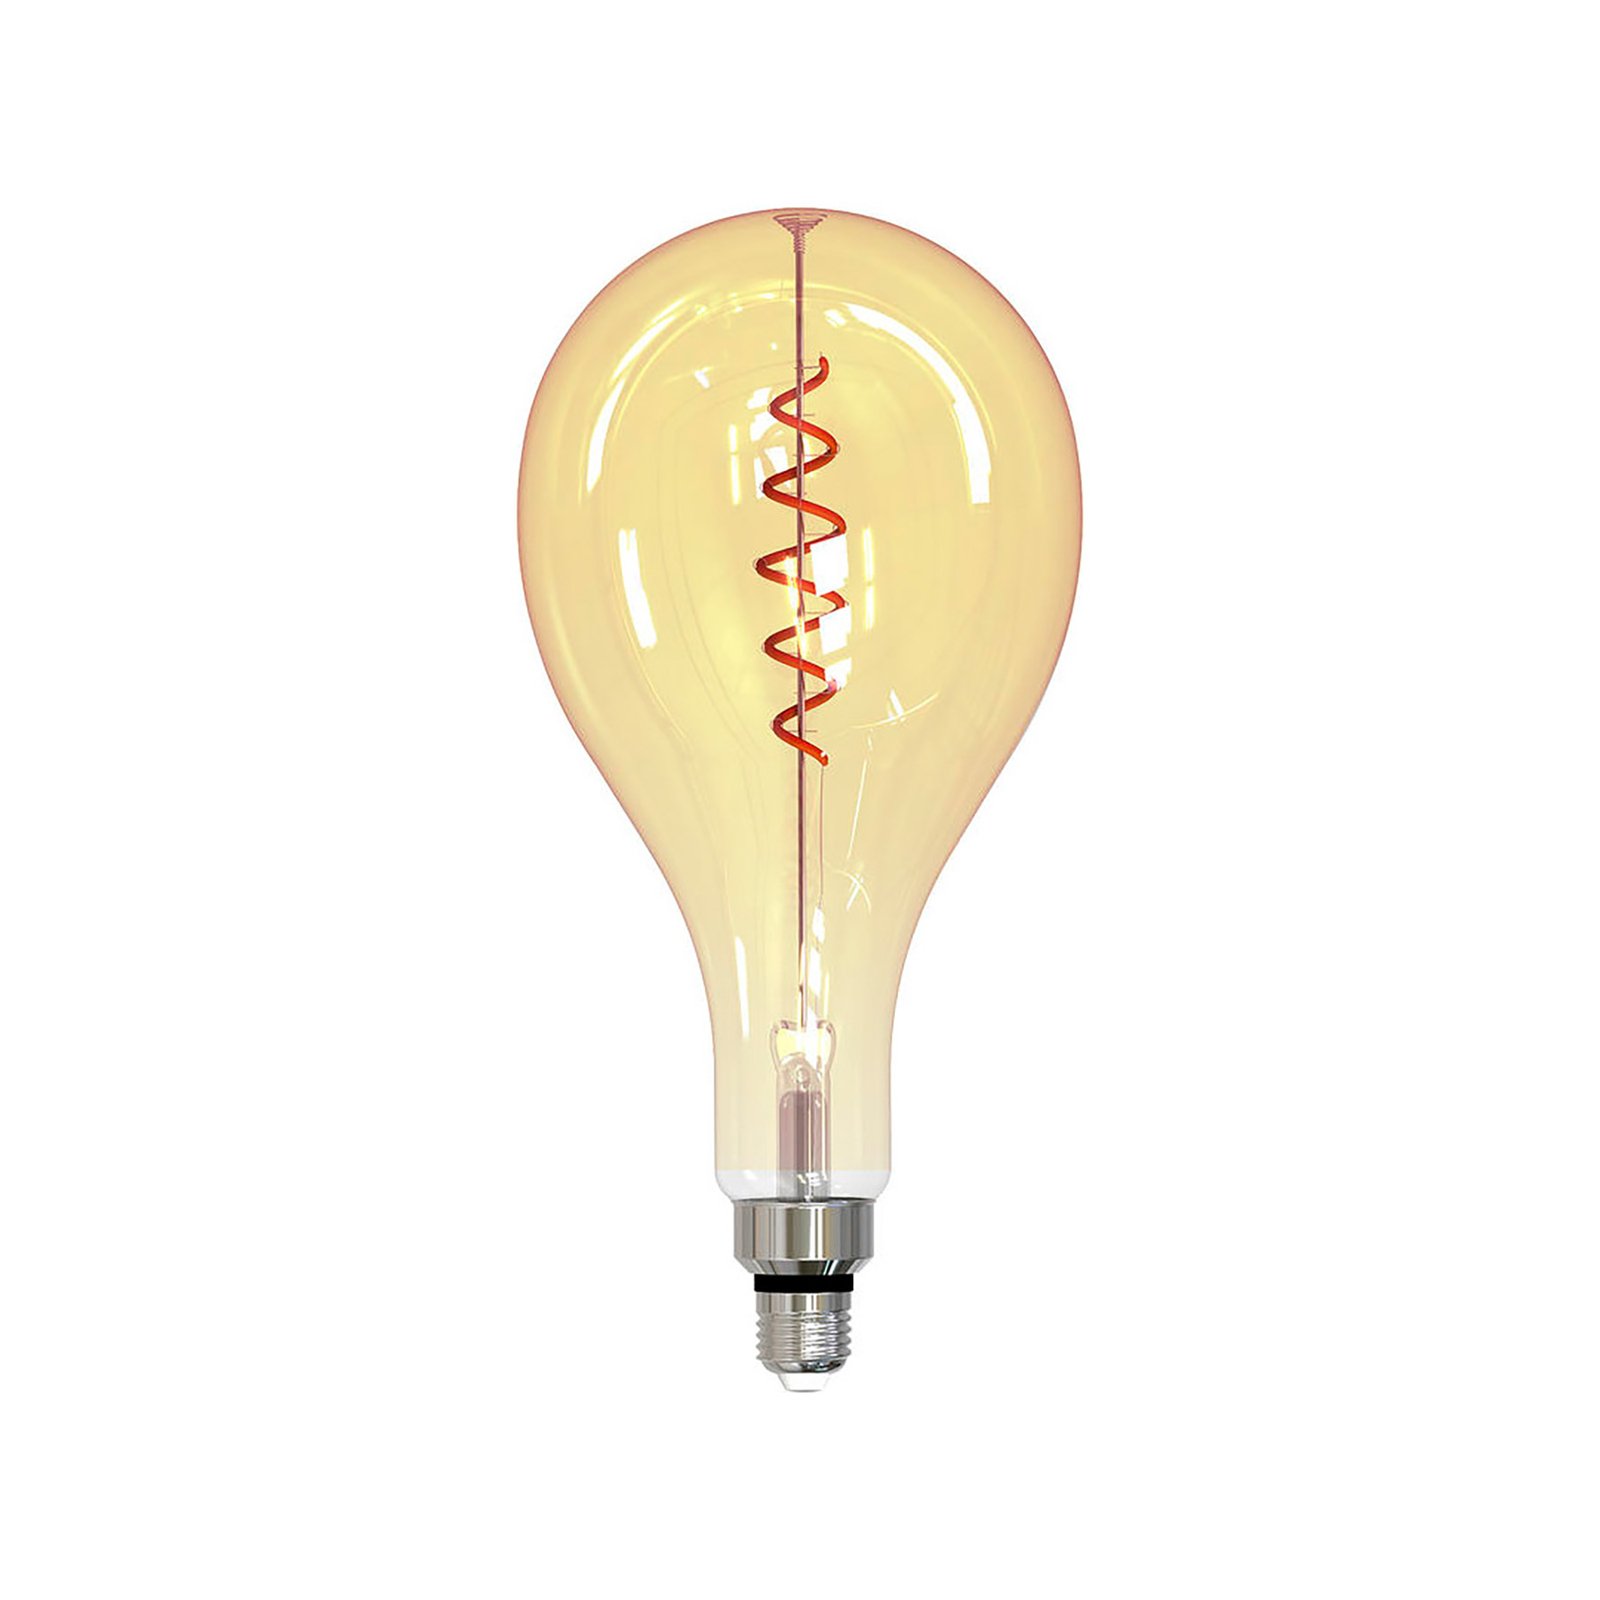 Müller Licht tint white LED-lampa E27 4,9 W guld